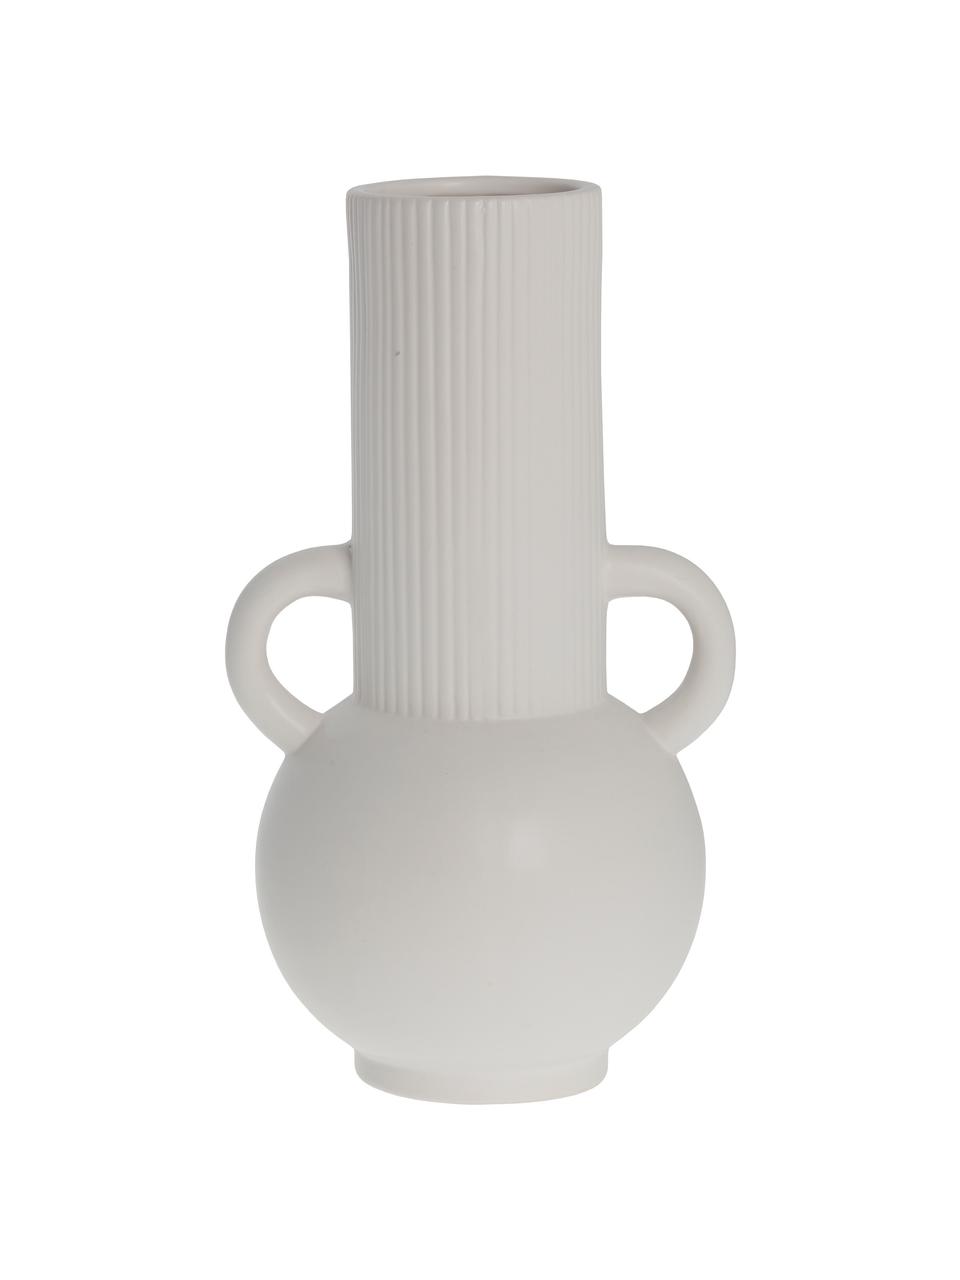 Vaso in ceramica fatto a mano Anine, Ceramica, Bianco, Larg. 16 x Alt. 29 cm